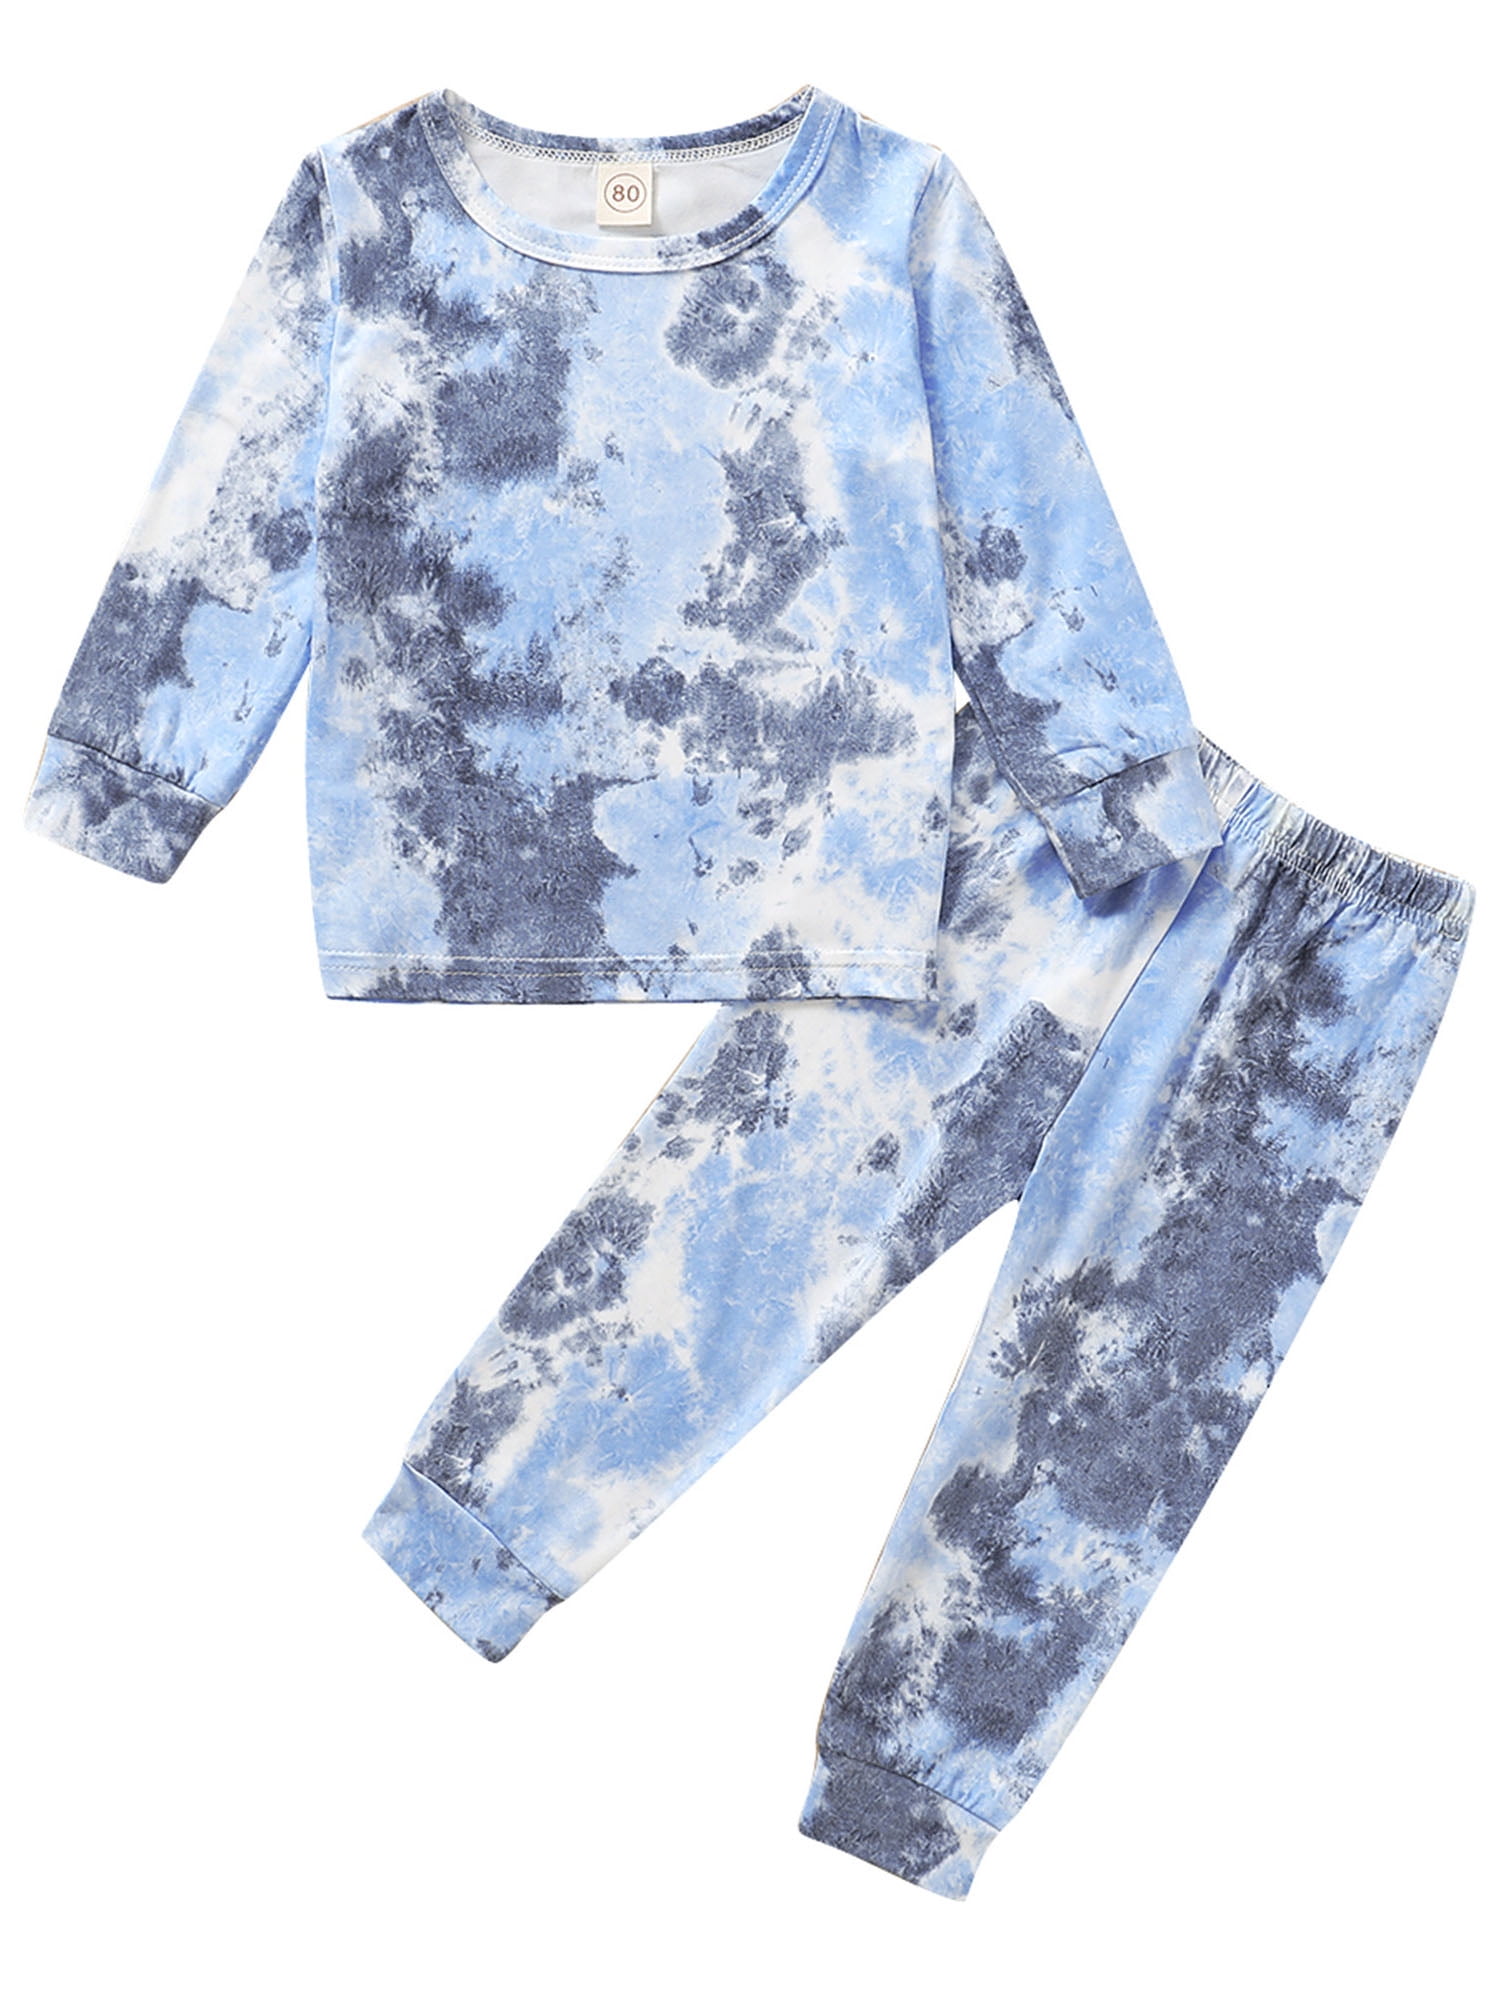 Abendedian Toddler Baby Girl Boy 2Pcs Outfit Tie-Dye Print Tops Long Pant Suit Kids Long Sleeve Crewneck Pajamas Sets 12M-5T